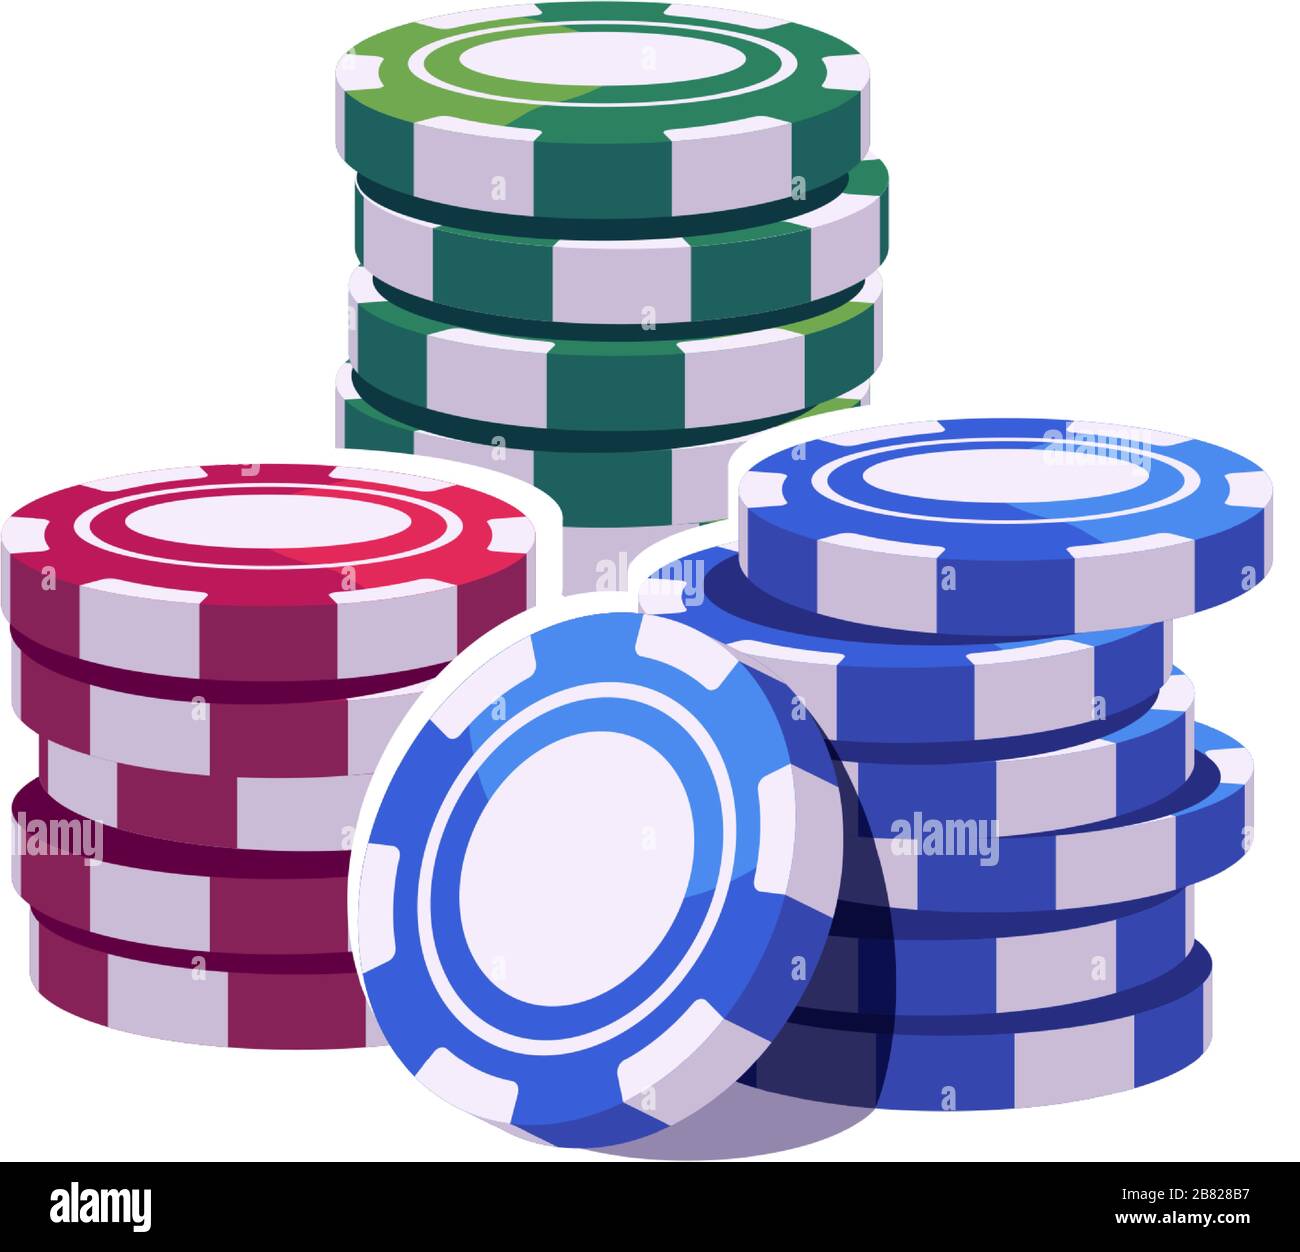 Colored poker chips stacks. Casino illustration Stock Vector